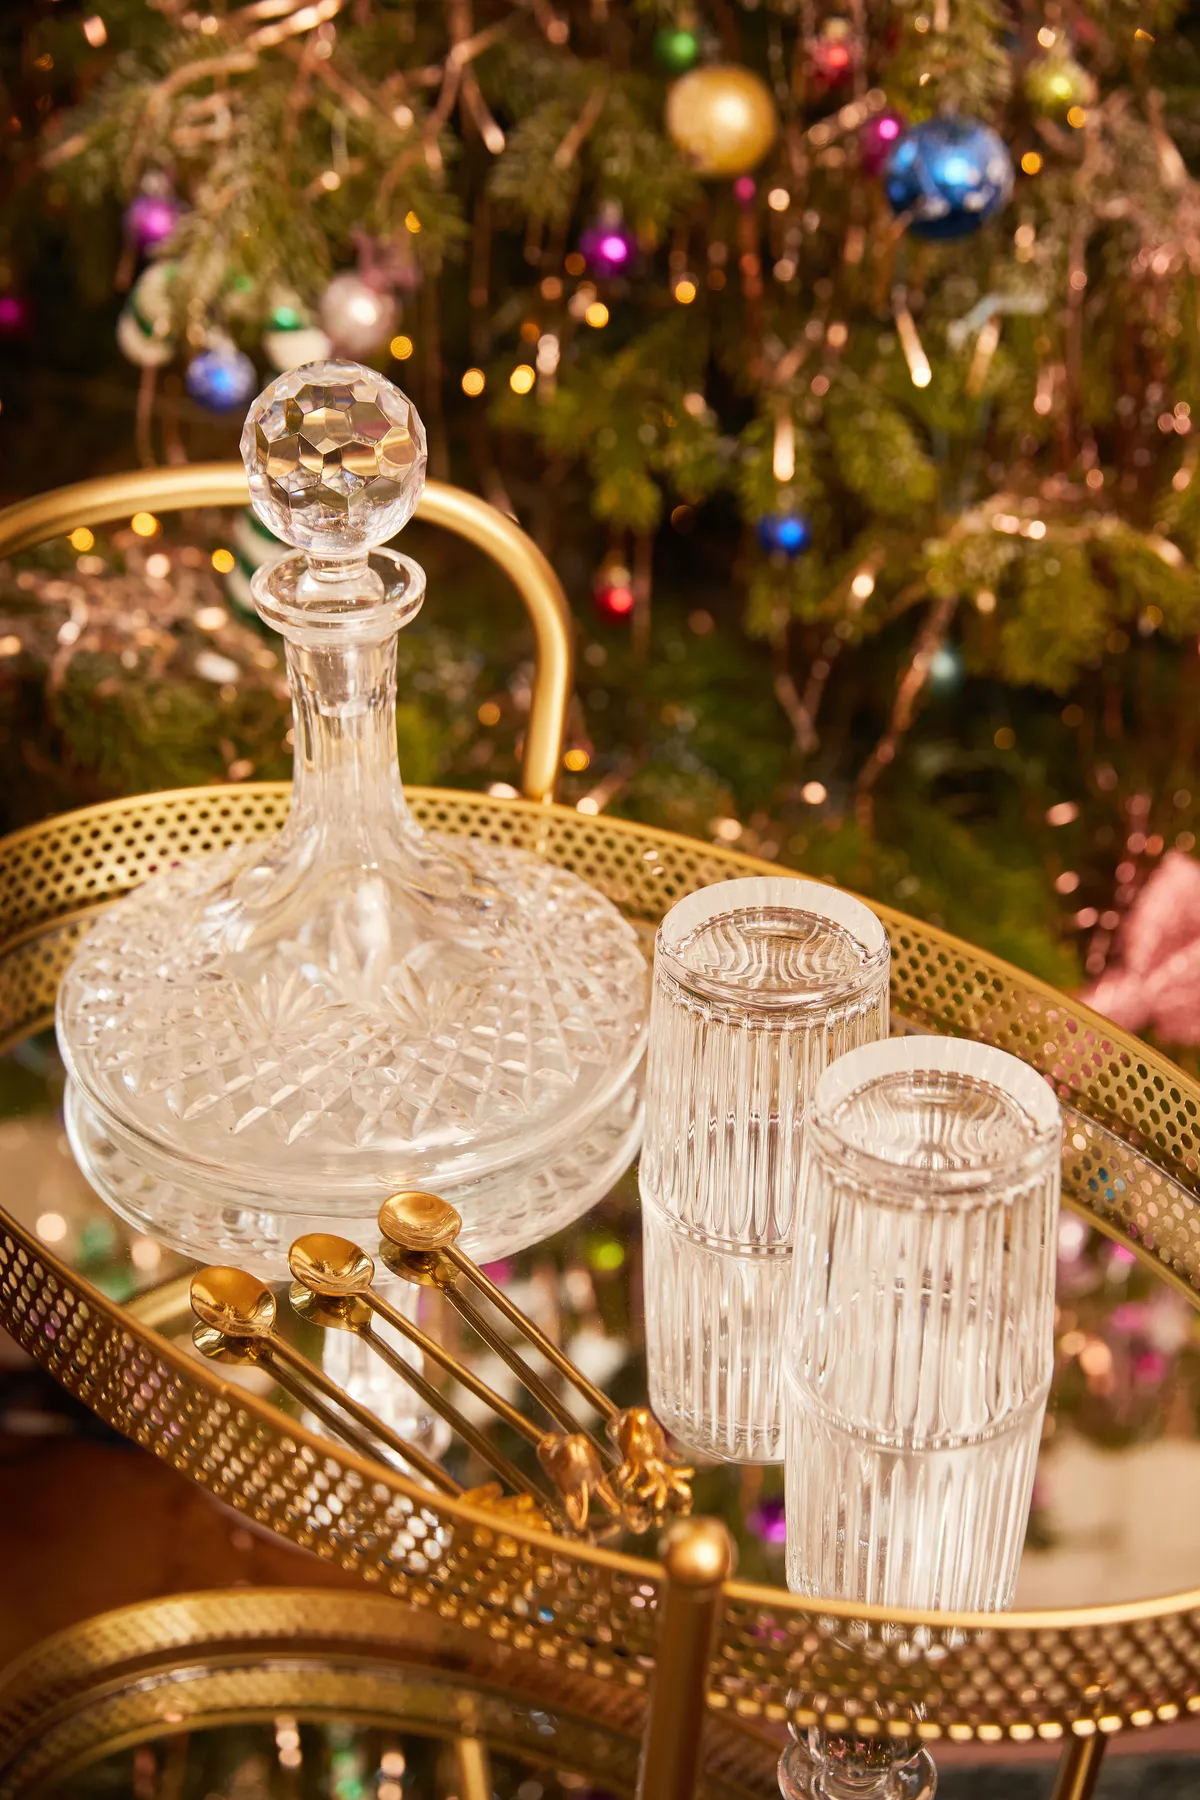 cut crystal glasssware on a gold drinks trolley